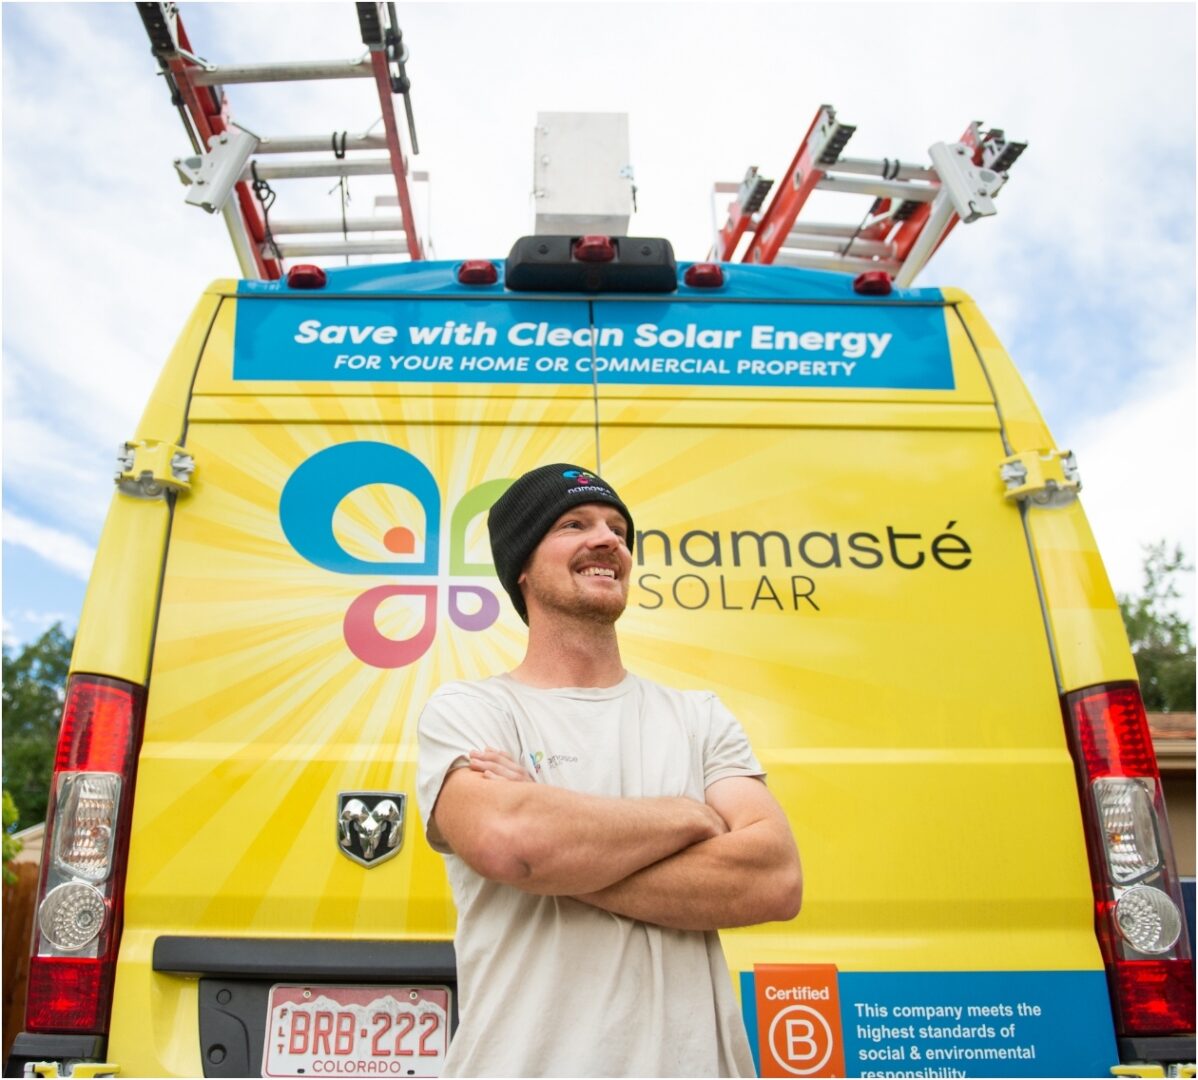 Employee standing in front of yellow Namaste Solar truck.